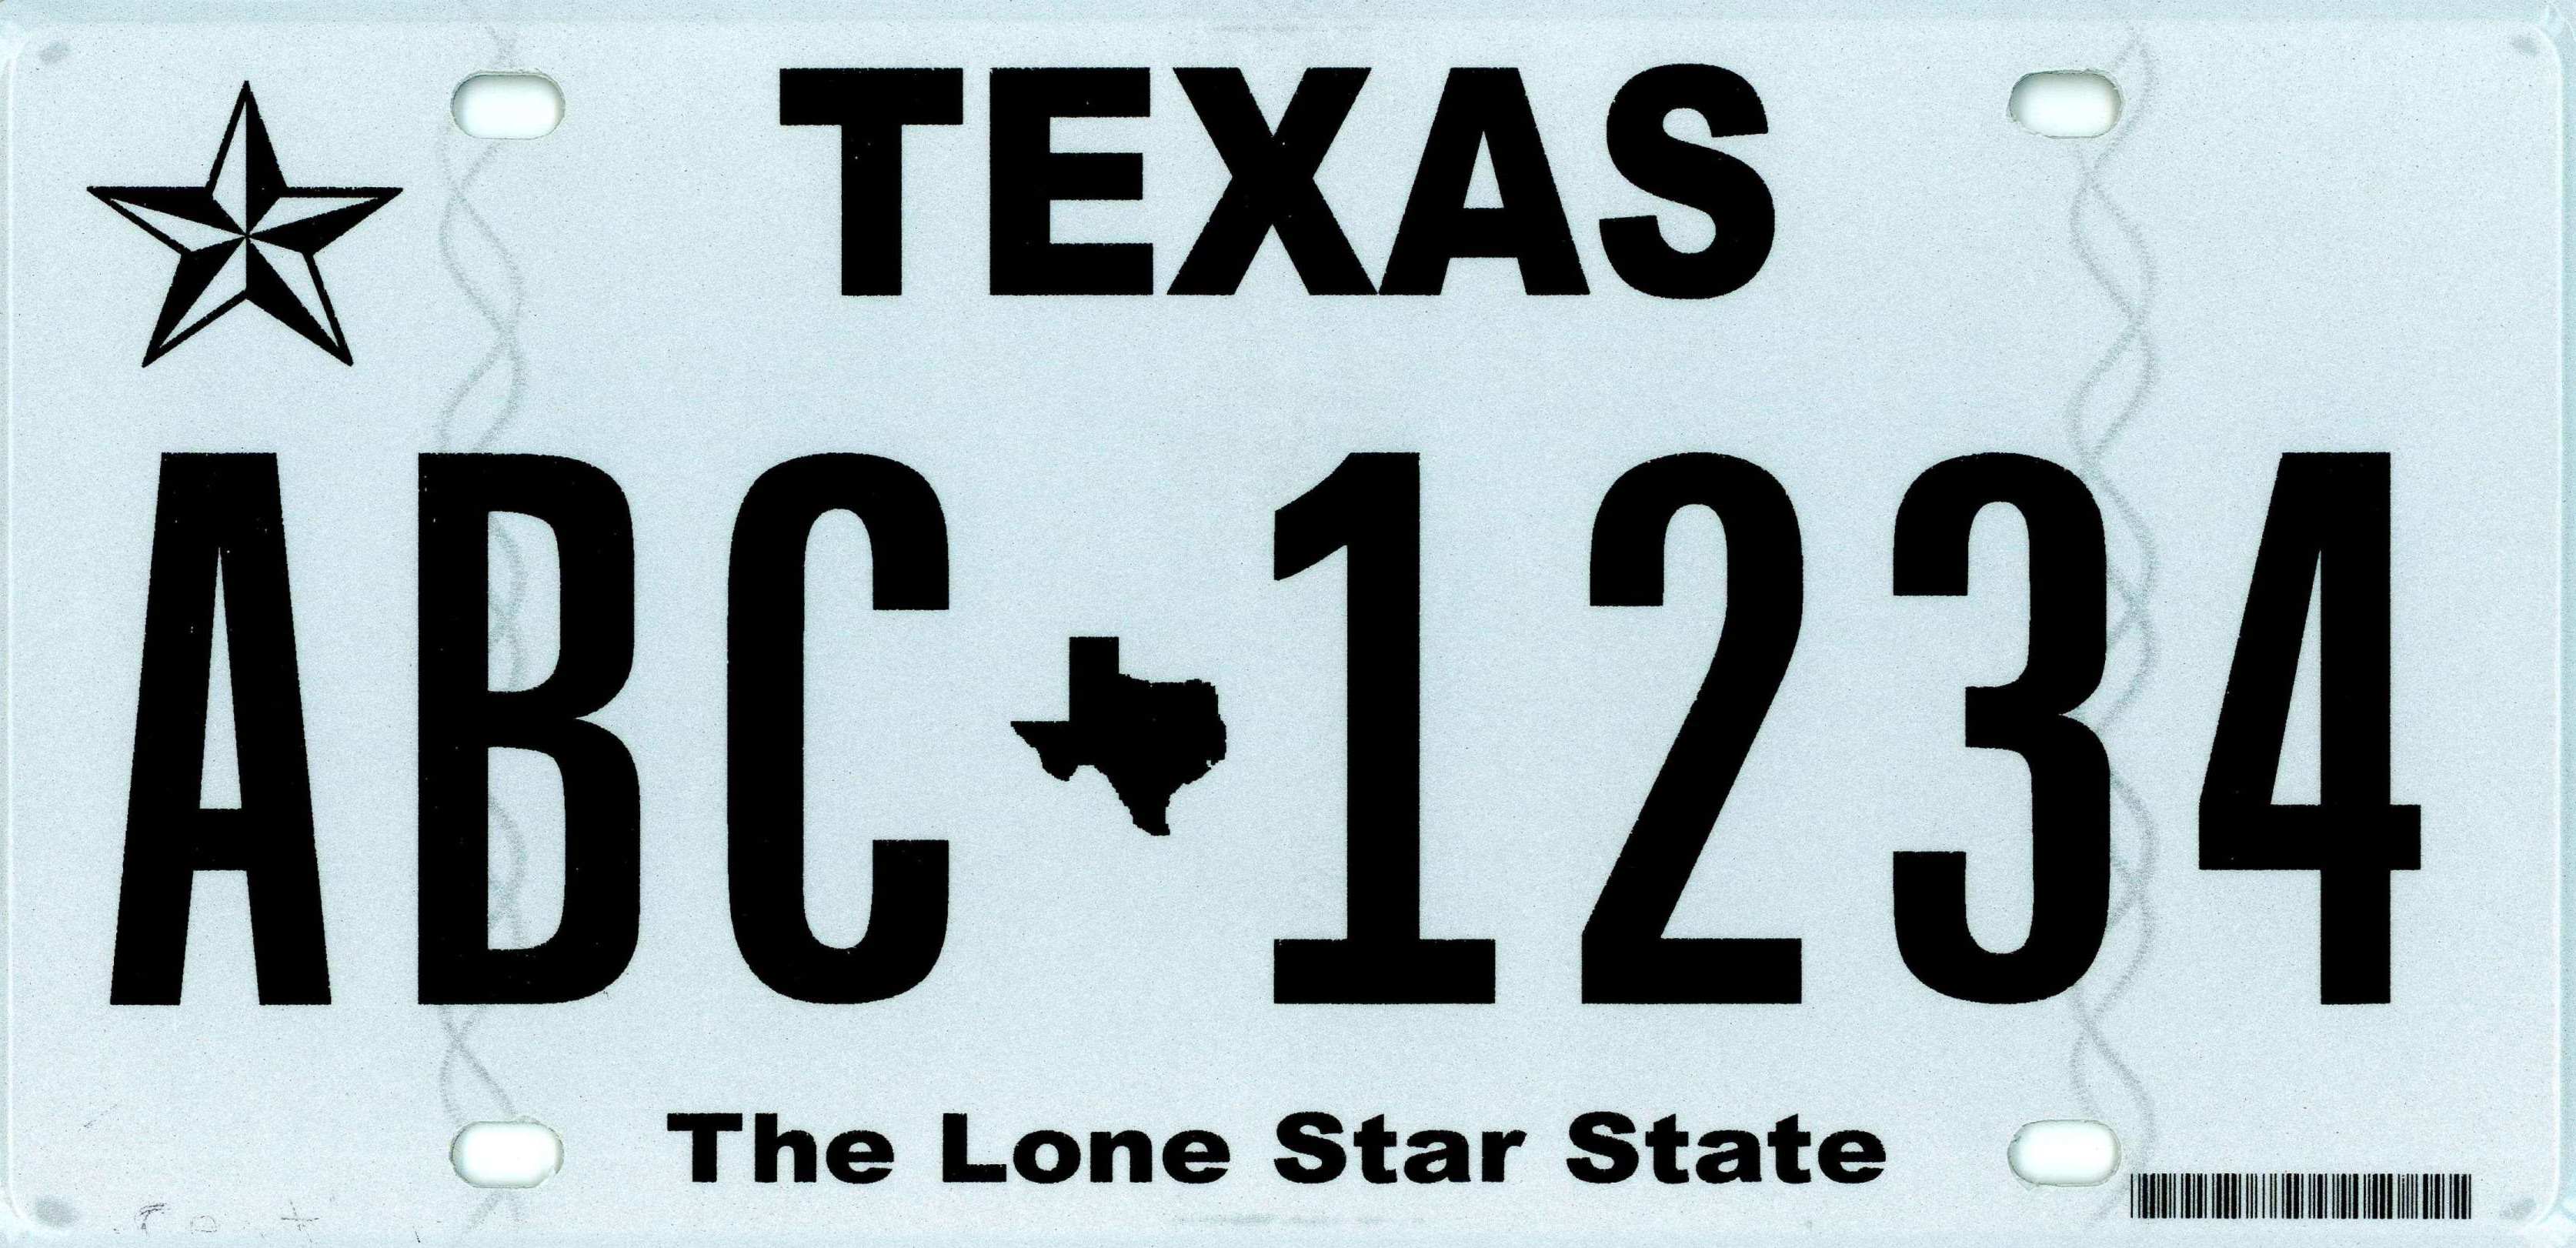 Standard license plates